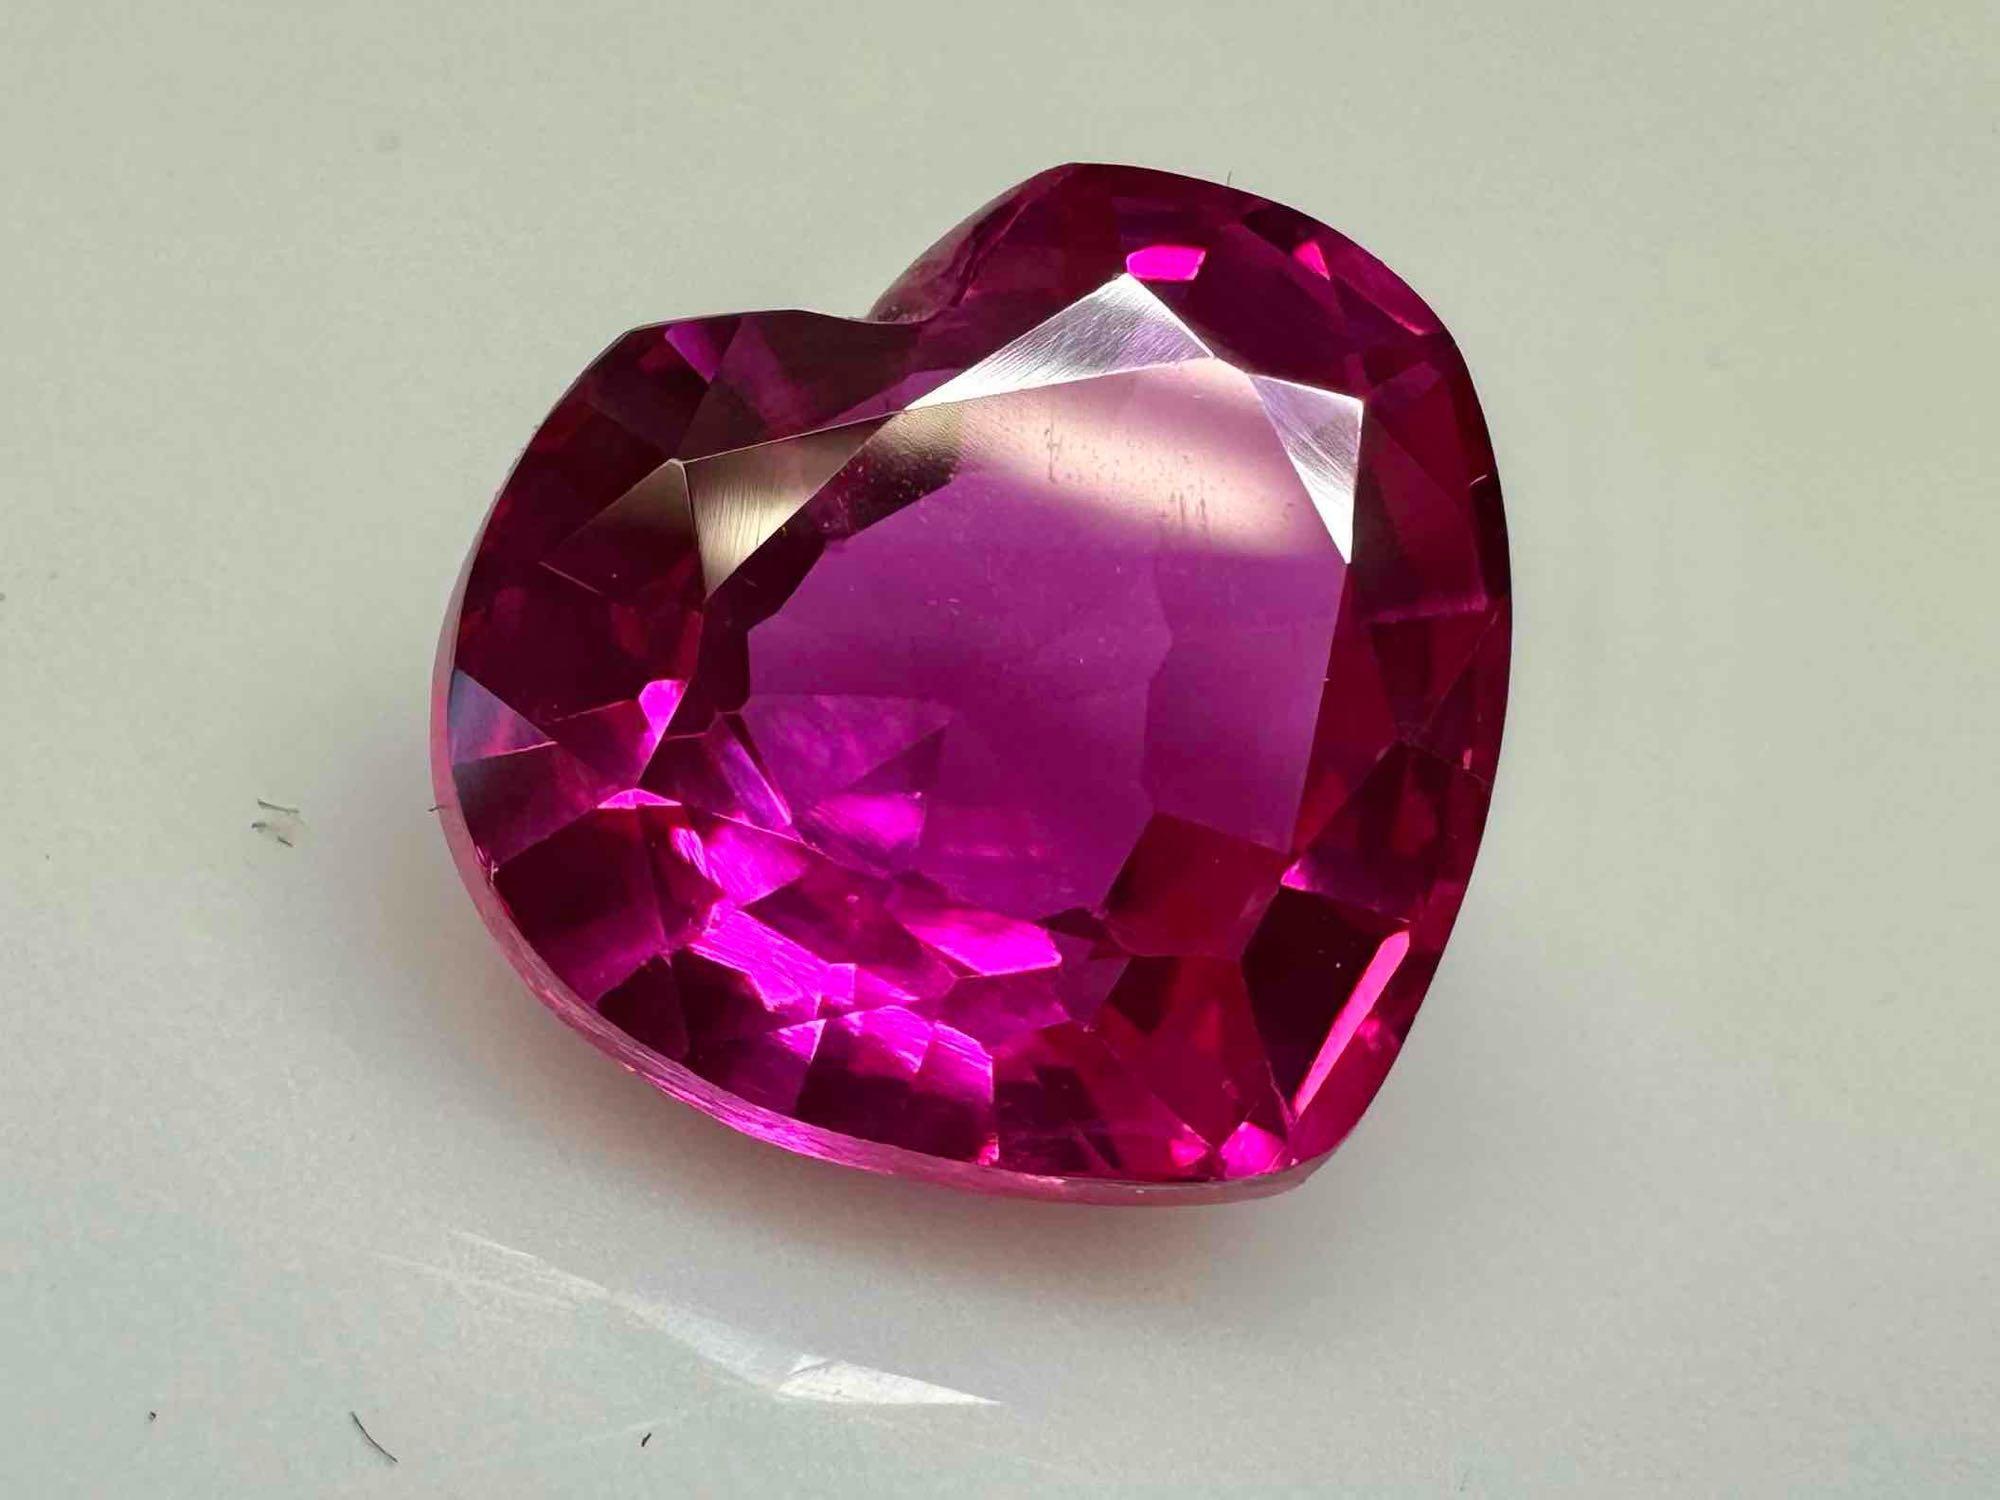 Beautiful Heart Cut Pink Sapphire Gemstone Sparkles Abound 11.4ct